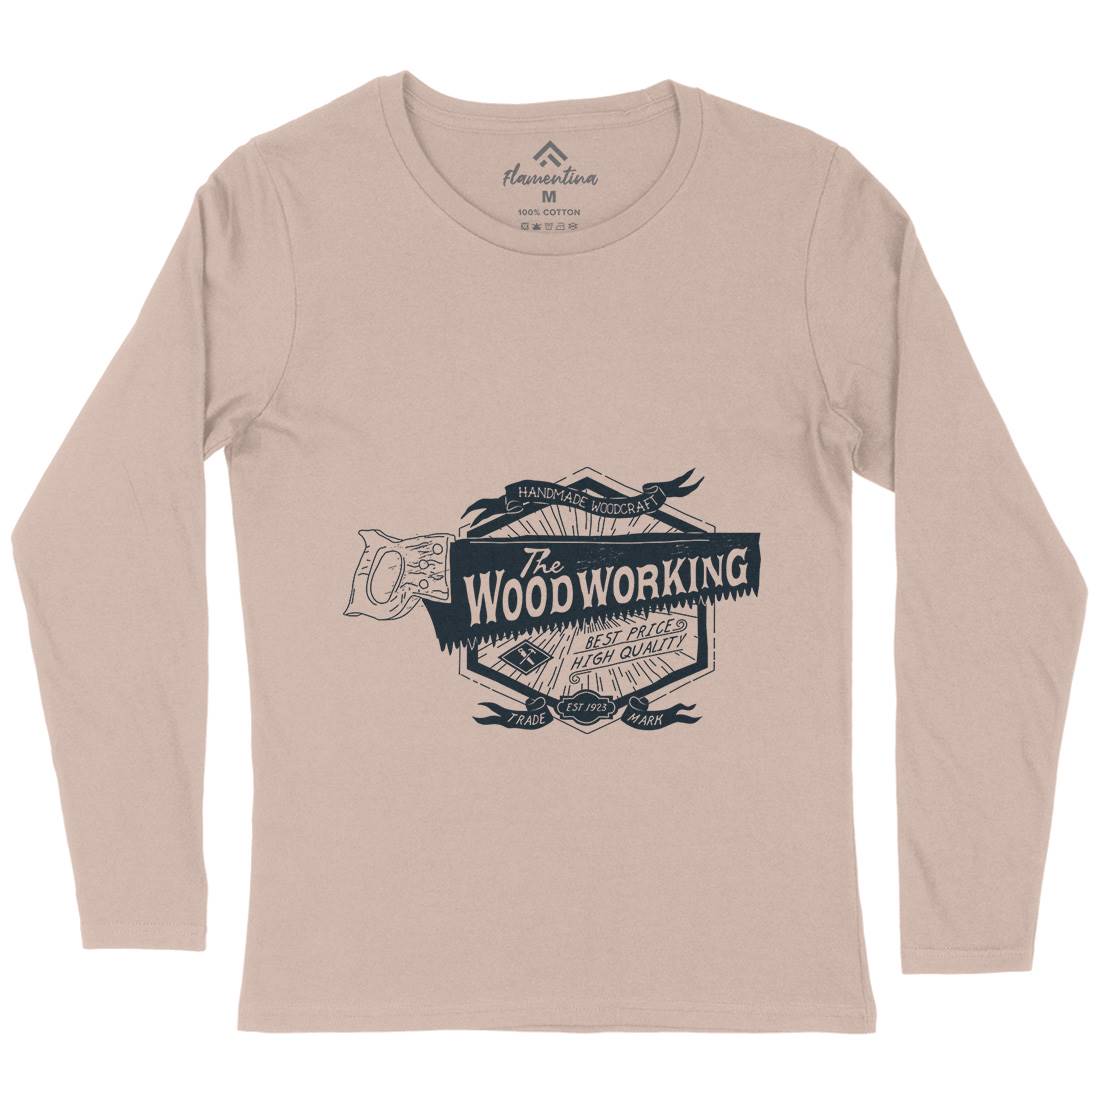 Wood Working Womens Long Sleeve T-Shirt Work A973